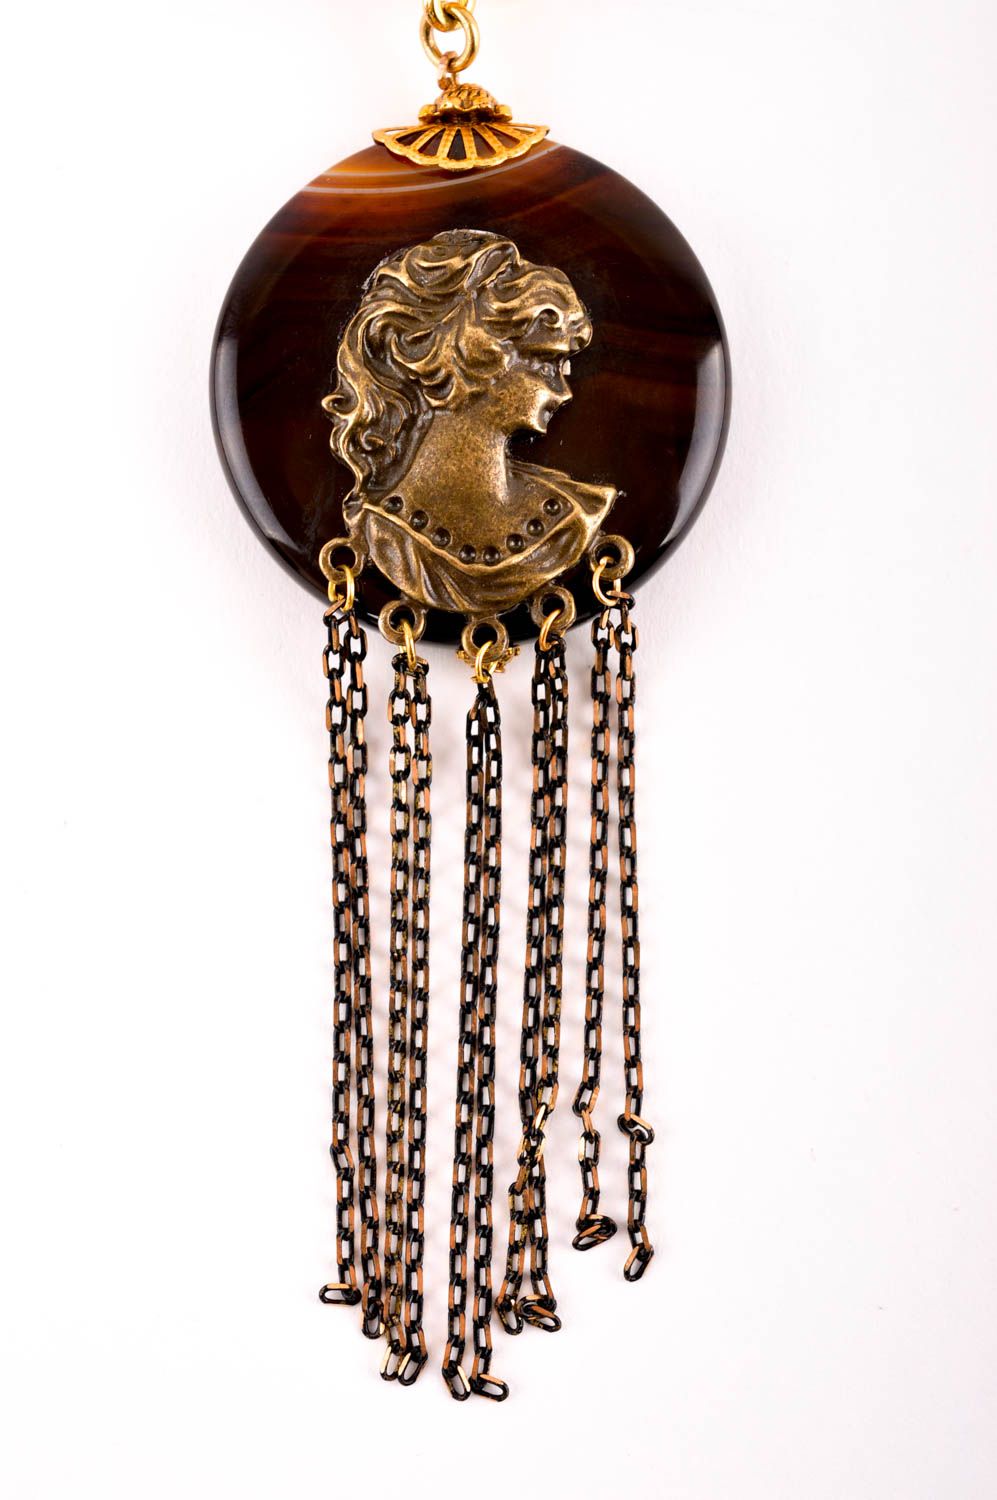 Handmade pendant designer accessory unusual gift ideas beads pendant for her photo 4